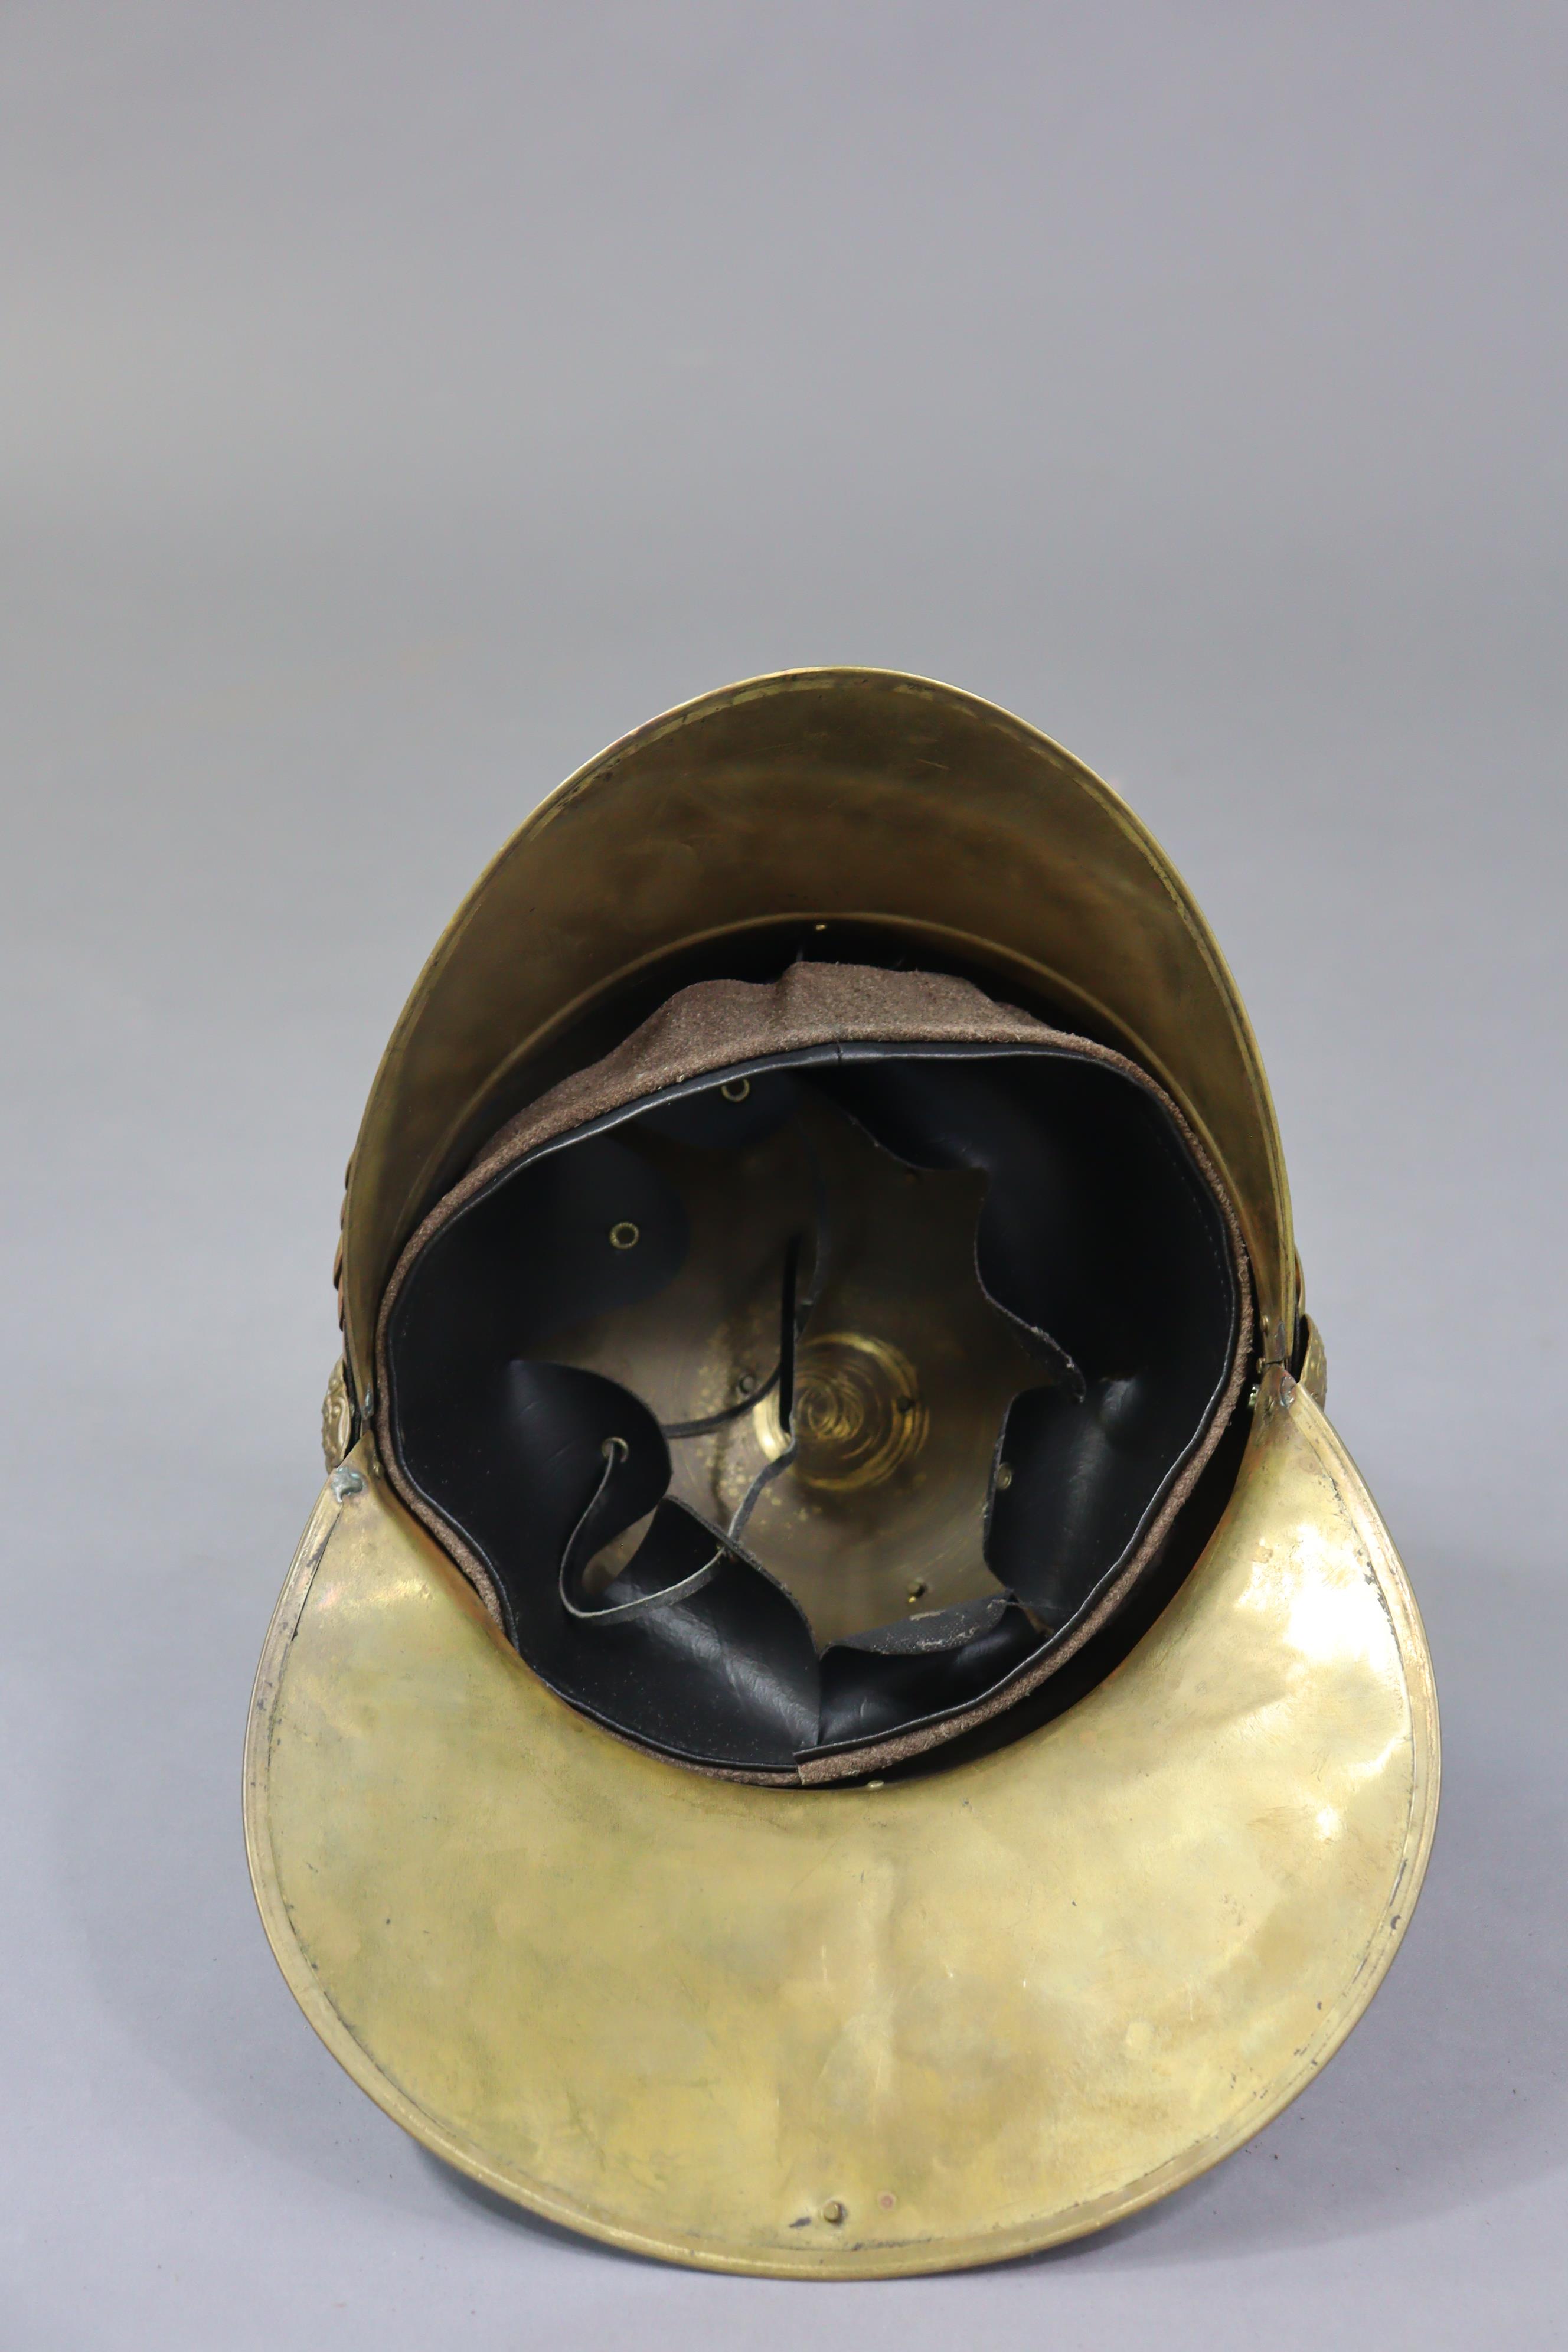 A replica Merryweather pattern brass fire men’s helmet. - Image 4 of 4